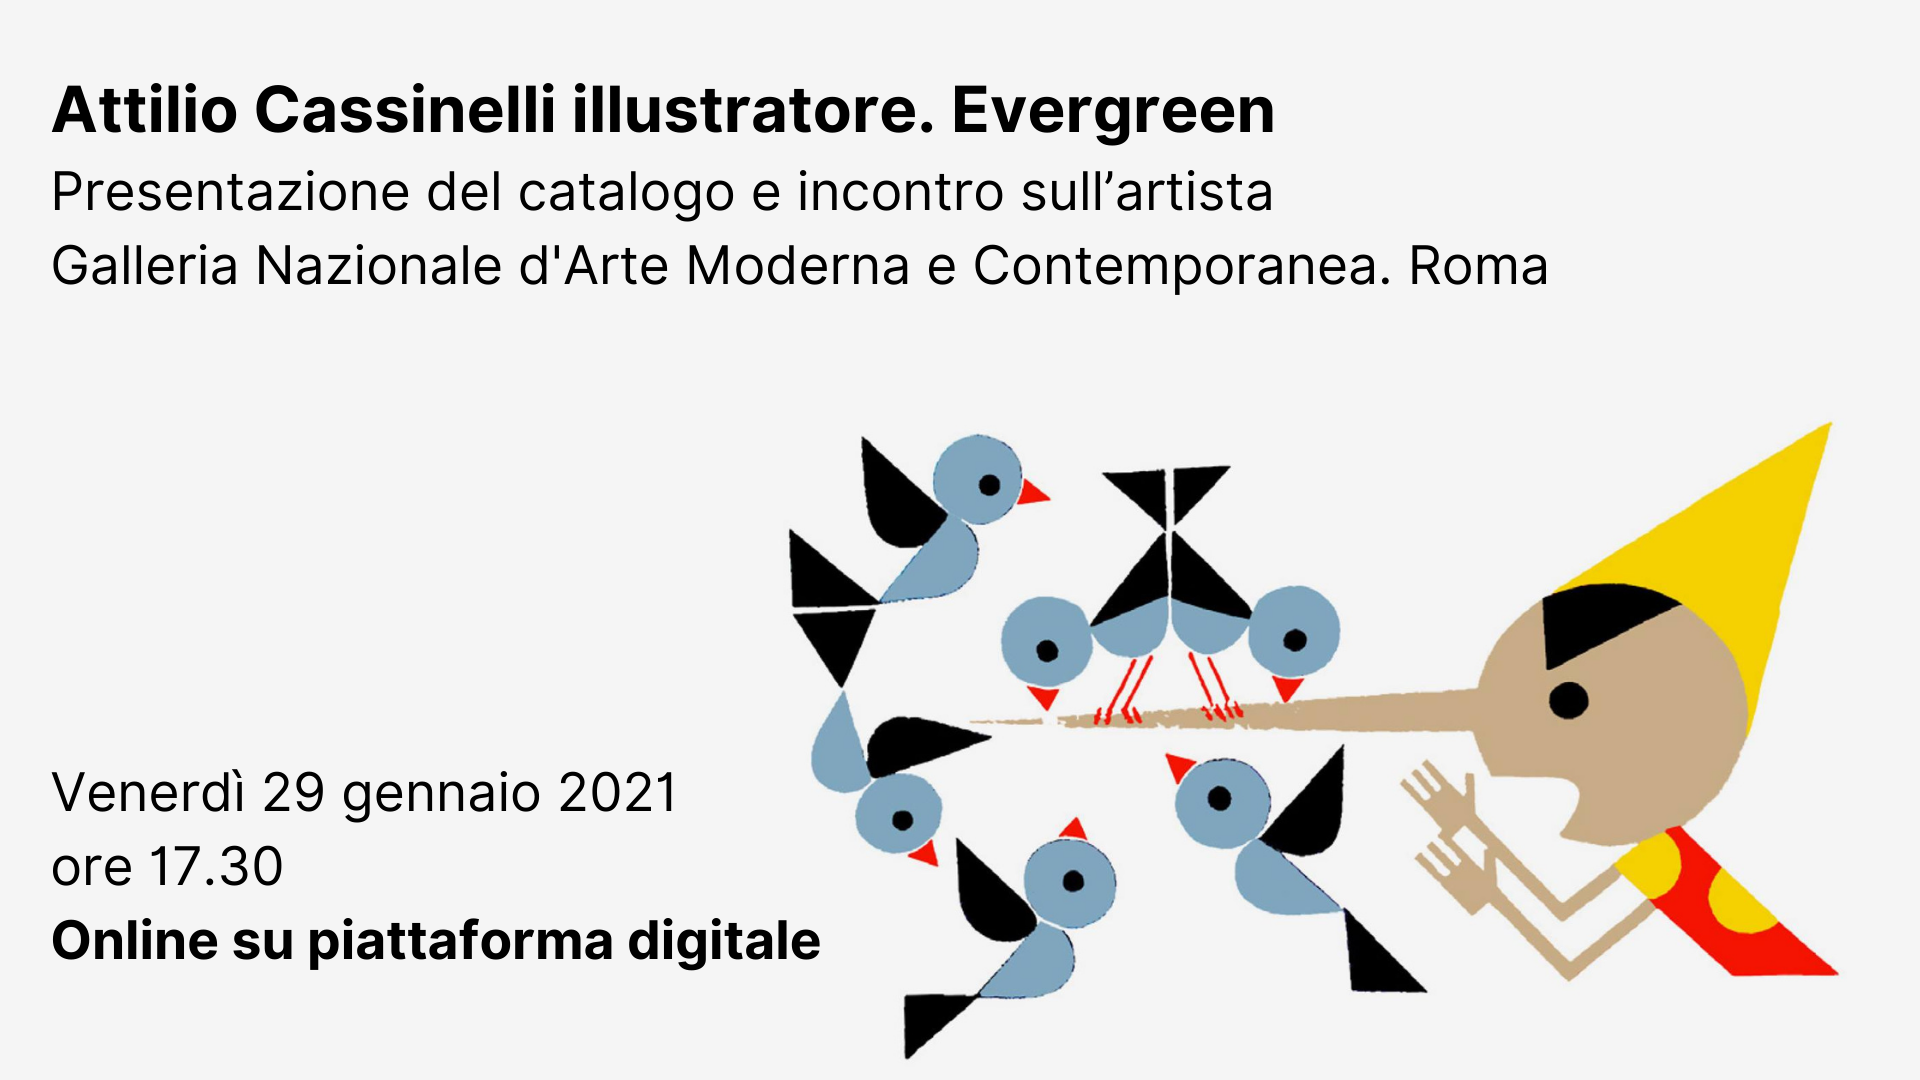 2021-01-26-attilio-cassinelli-illustratore-evergreen